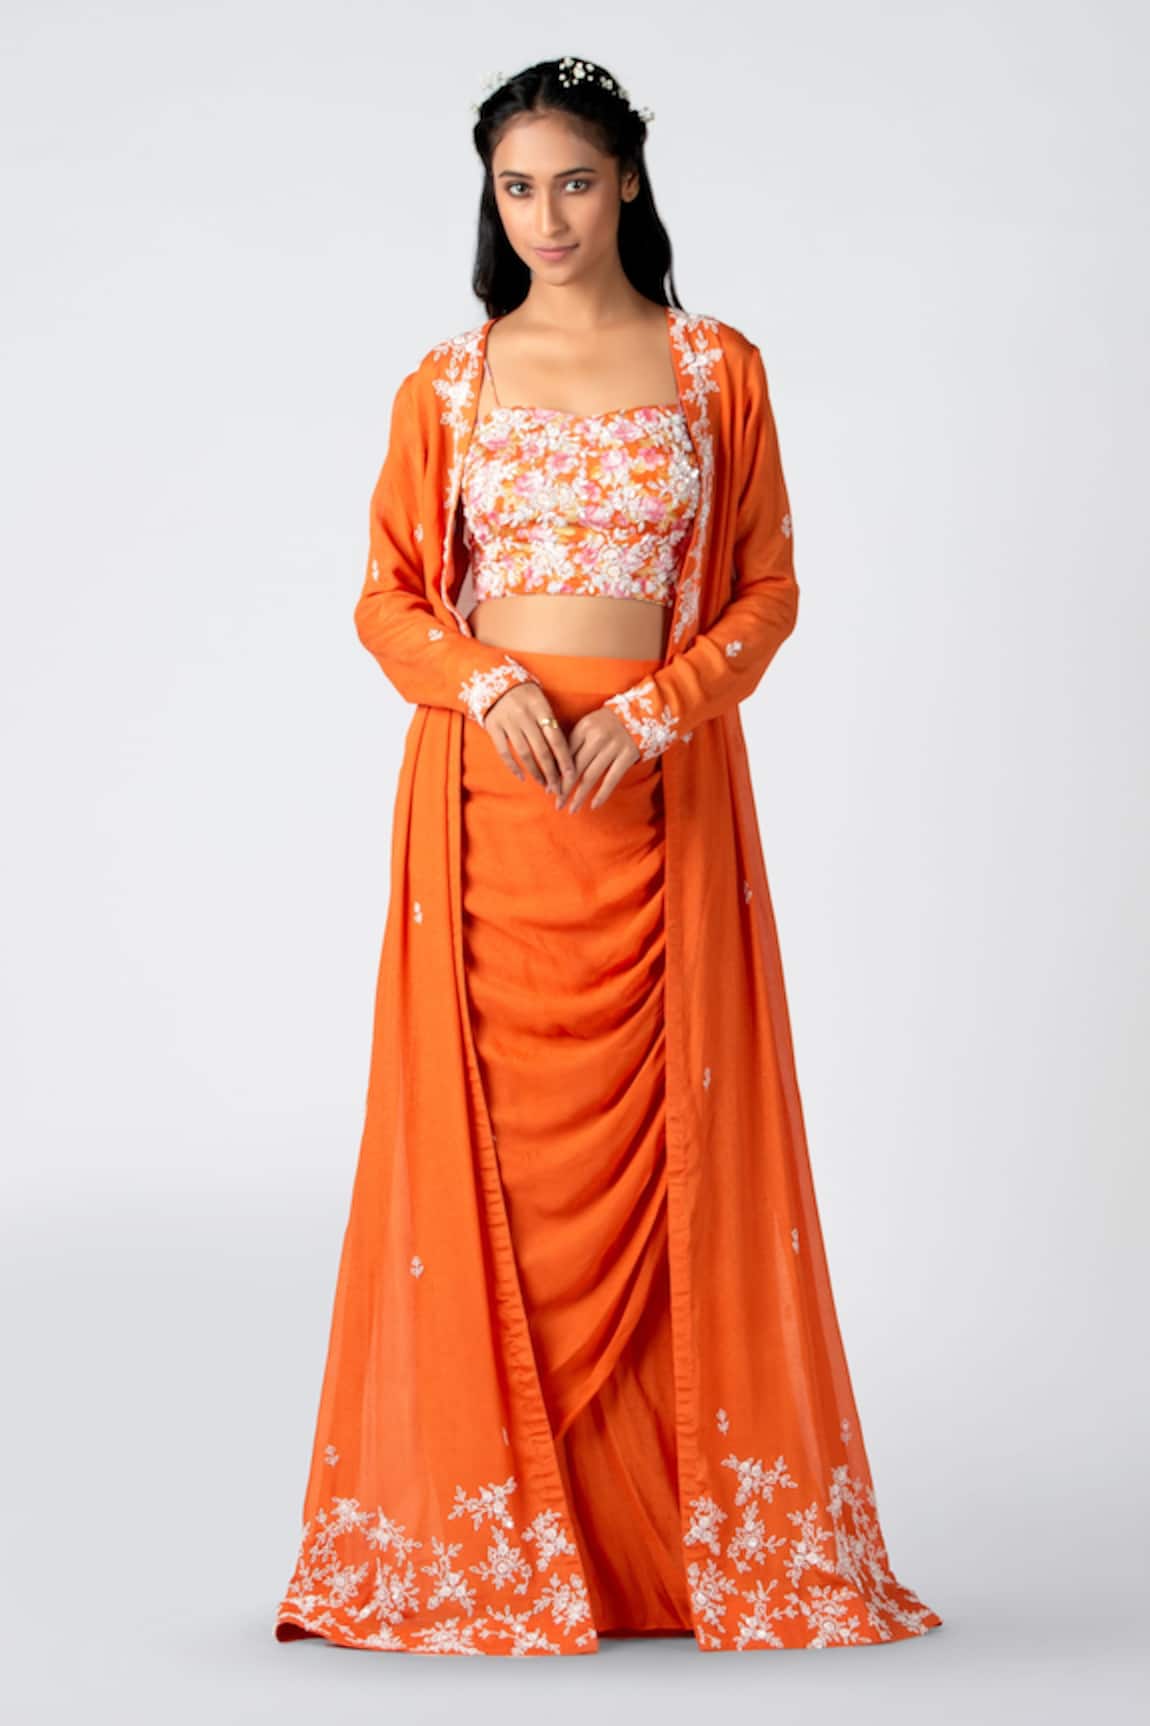 Suruchi Parakh Floral Embroidered Jacket & Draped Skirt Set